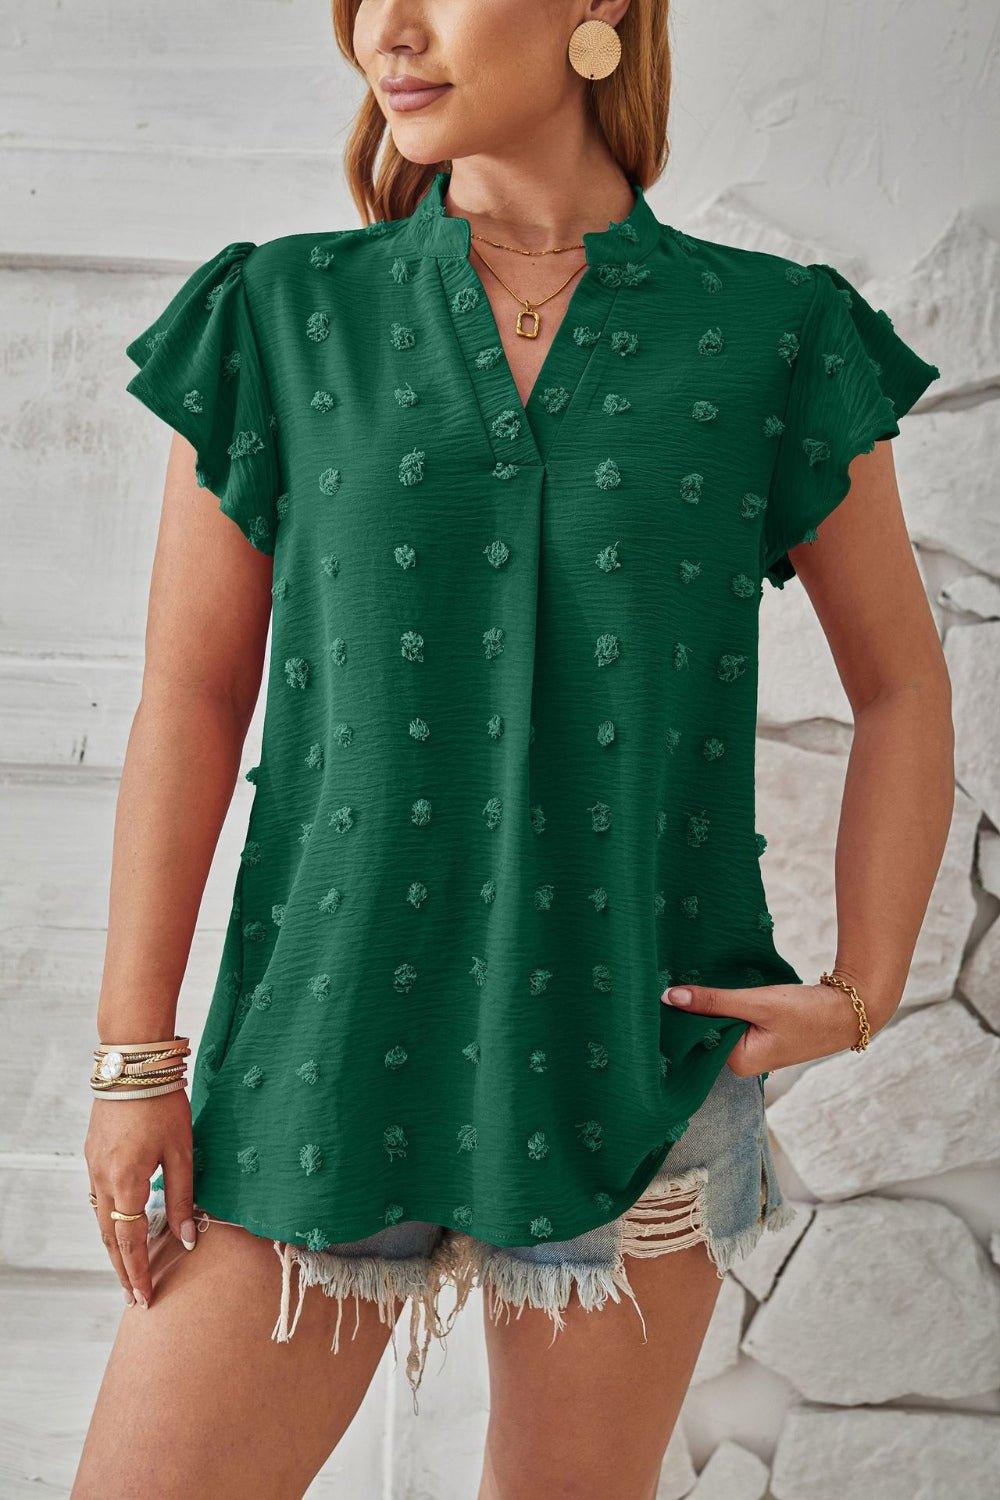 Bona Fide Fashion - Swiss Dot Notched Cap Sleeve T-Shirt - Women Fashion - Bona Fide Fashion